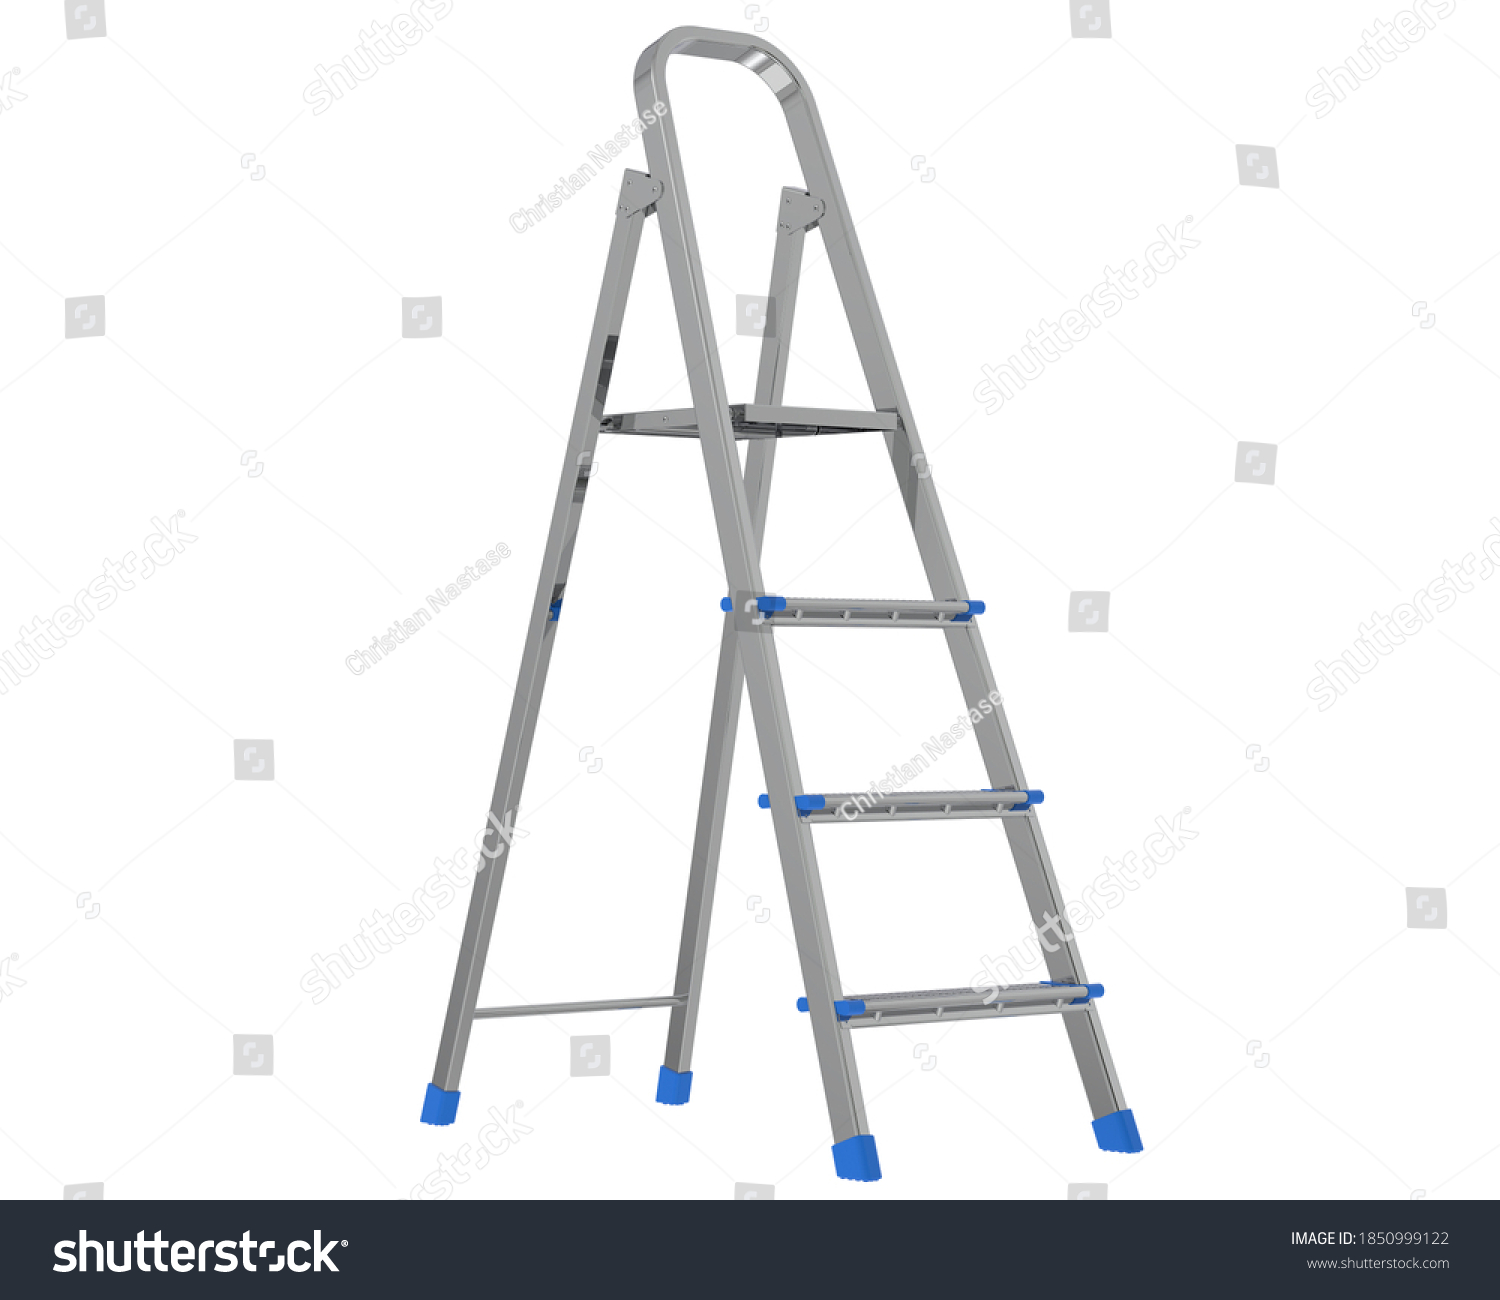 662 Ladder Png Images, Stock Photos & Vectors | Shutterstock